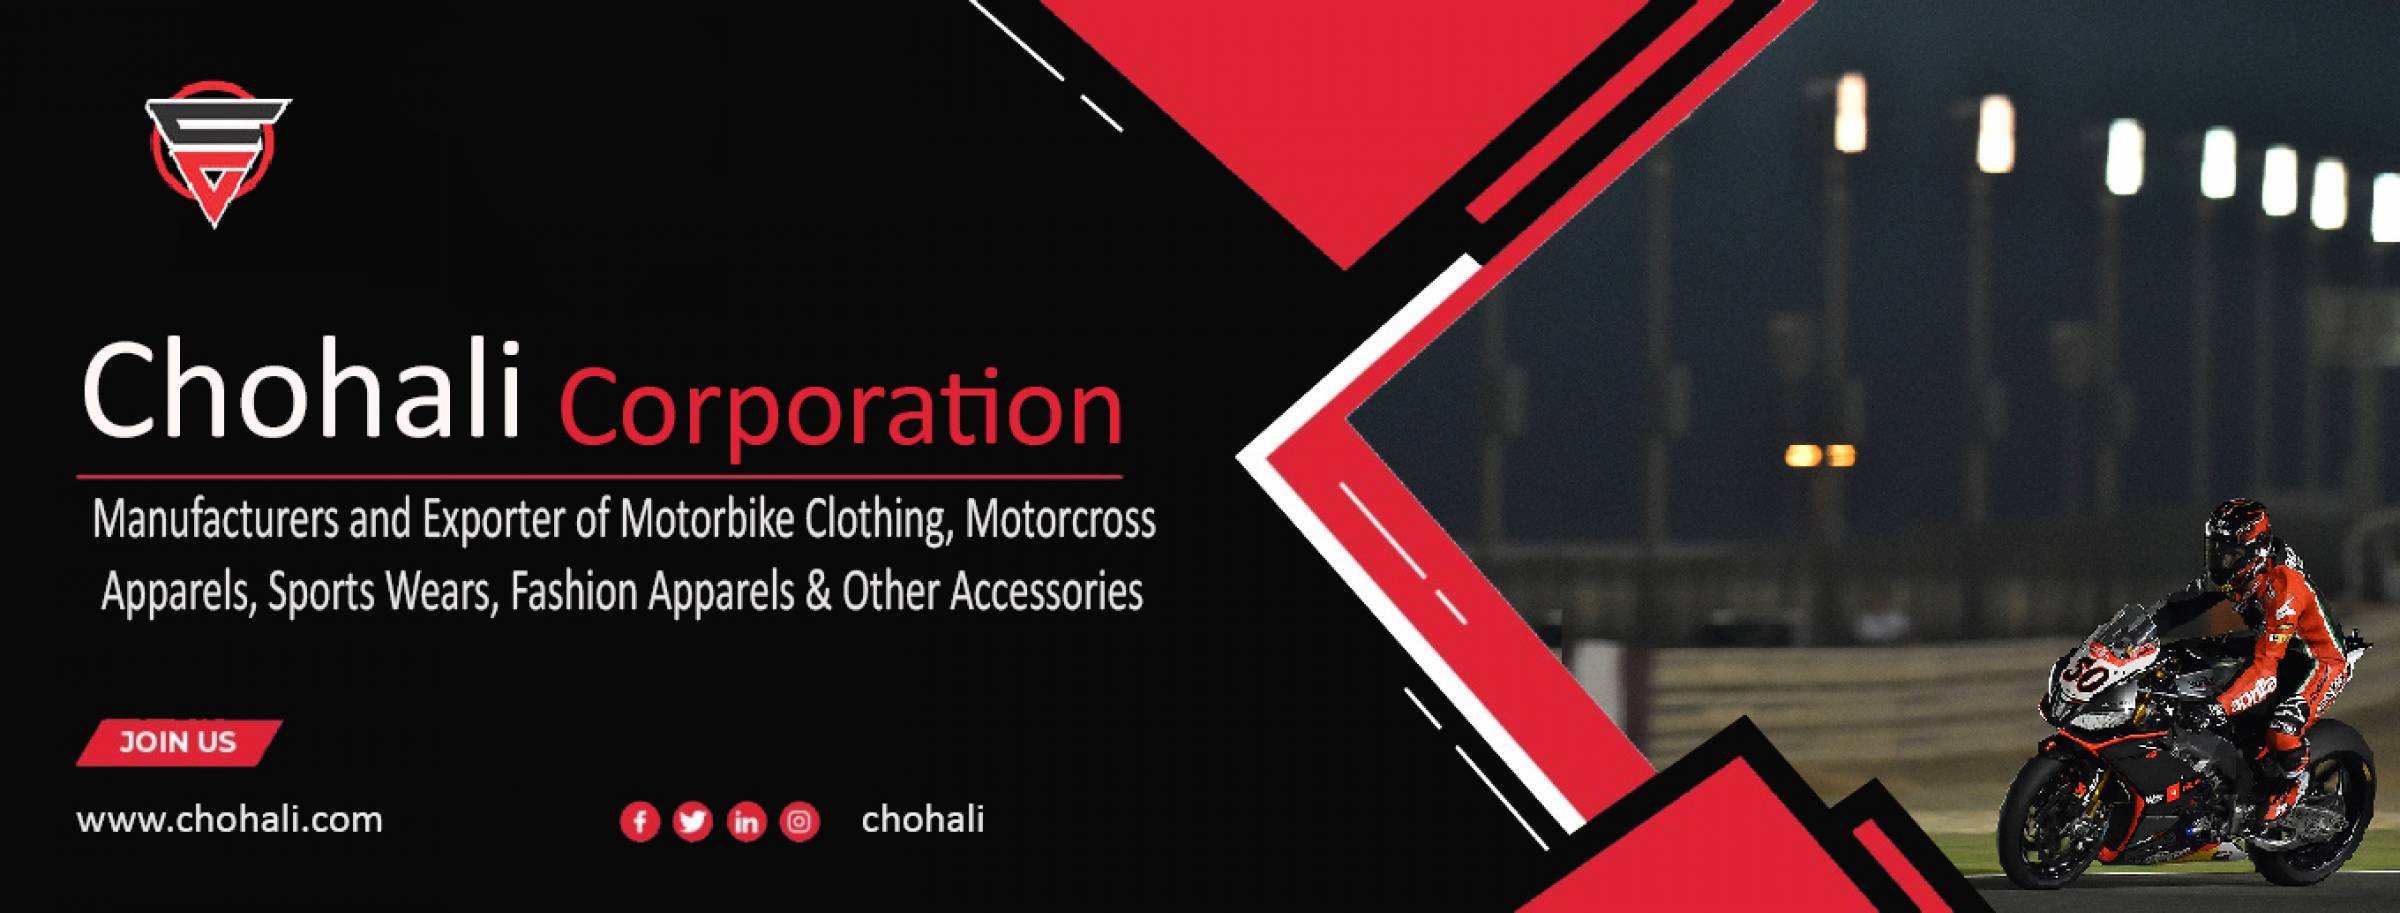 Chohali Corporation